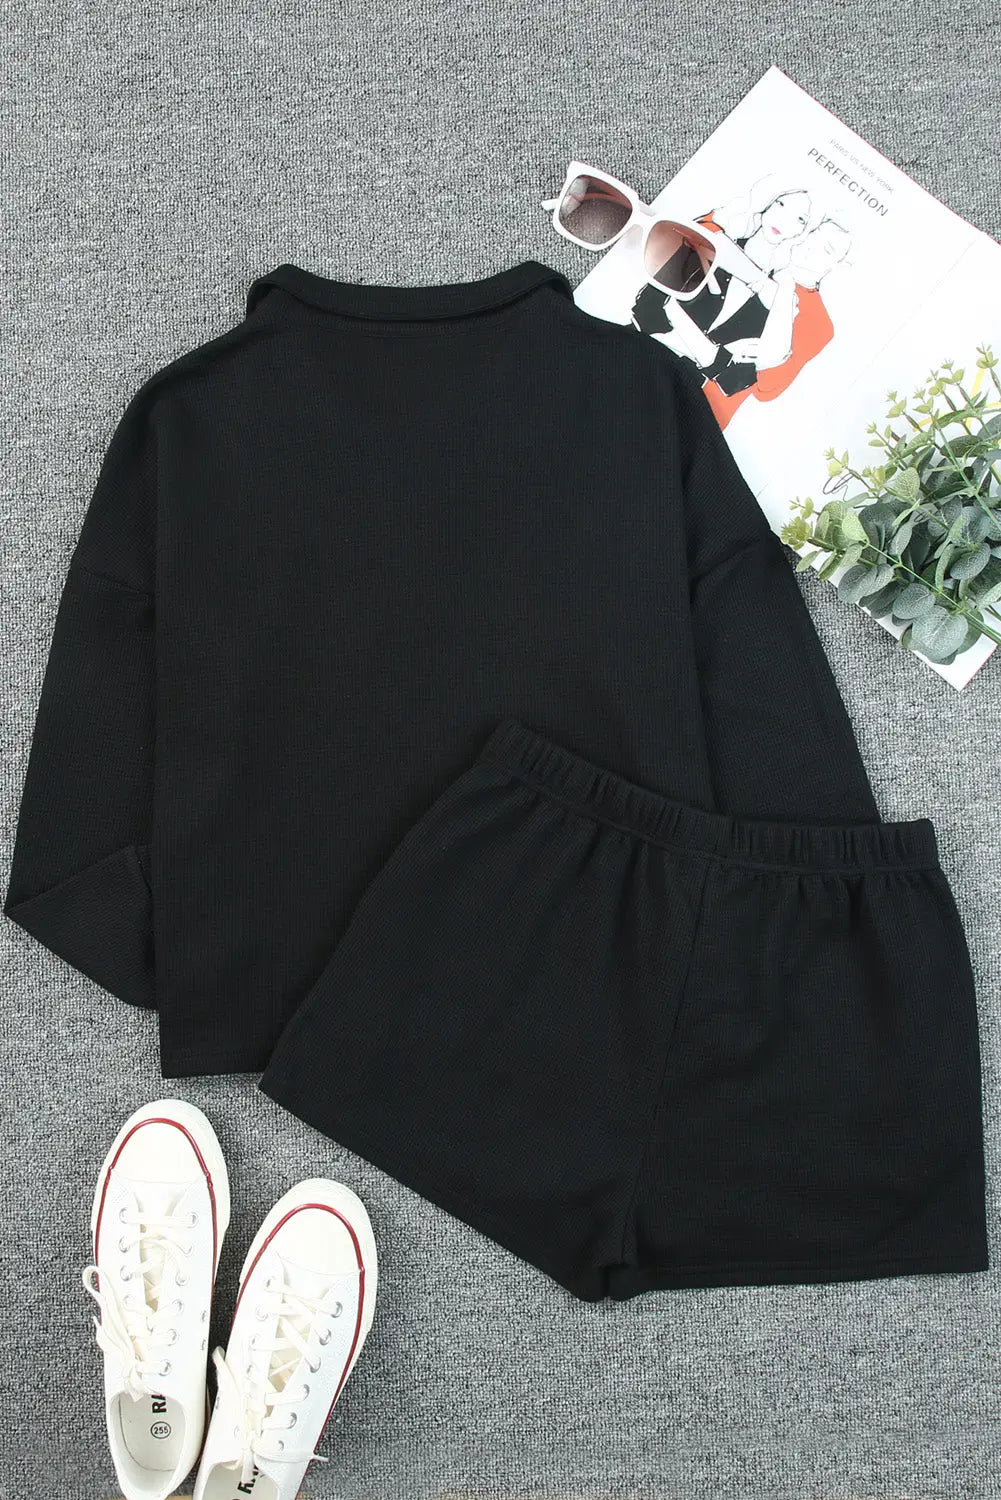 Black ribbed zipper sweatshirt and high waist shorts set - loungewear